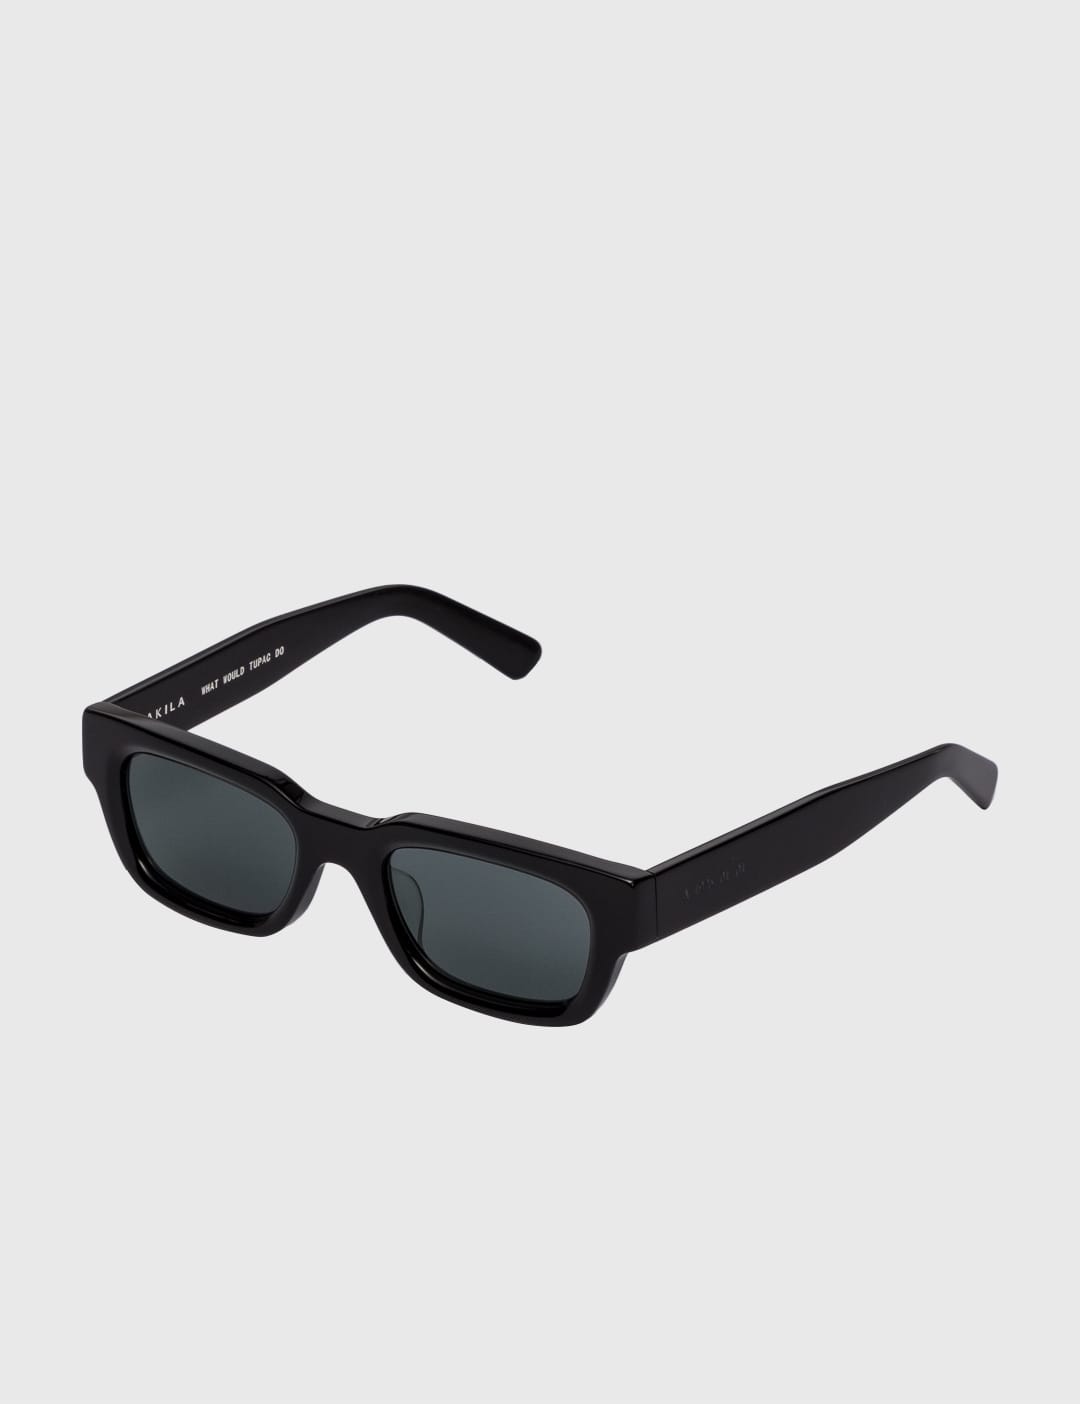 Akila - Zed Sunglasses | HBX - Globally Curated Fashion and 